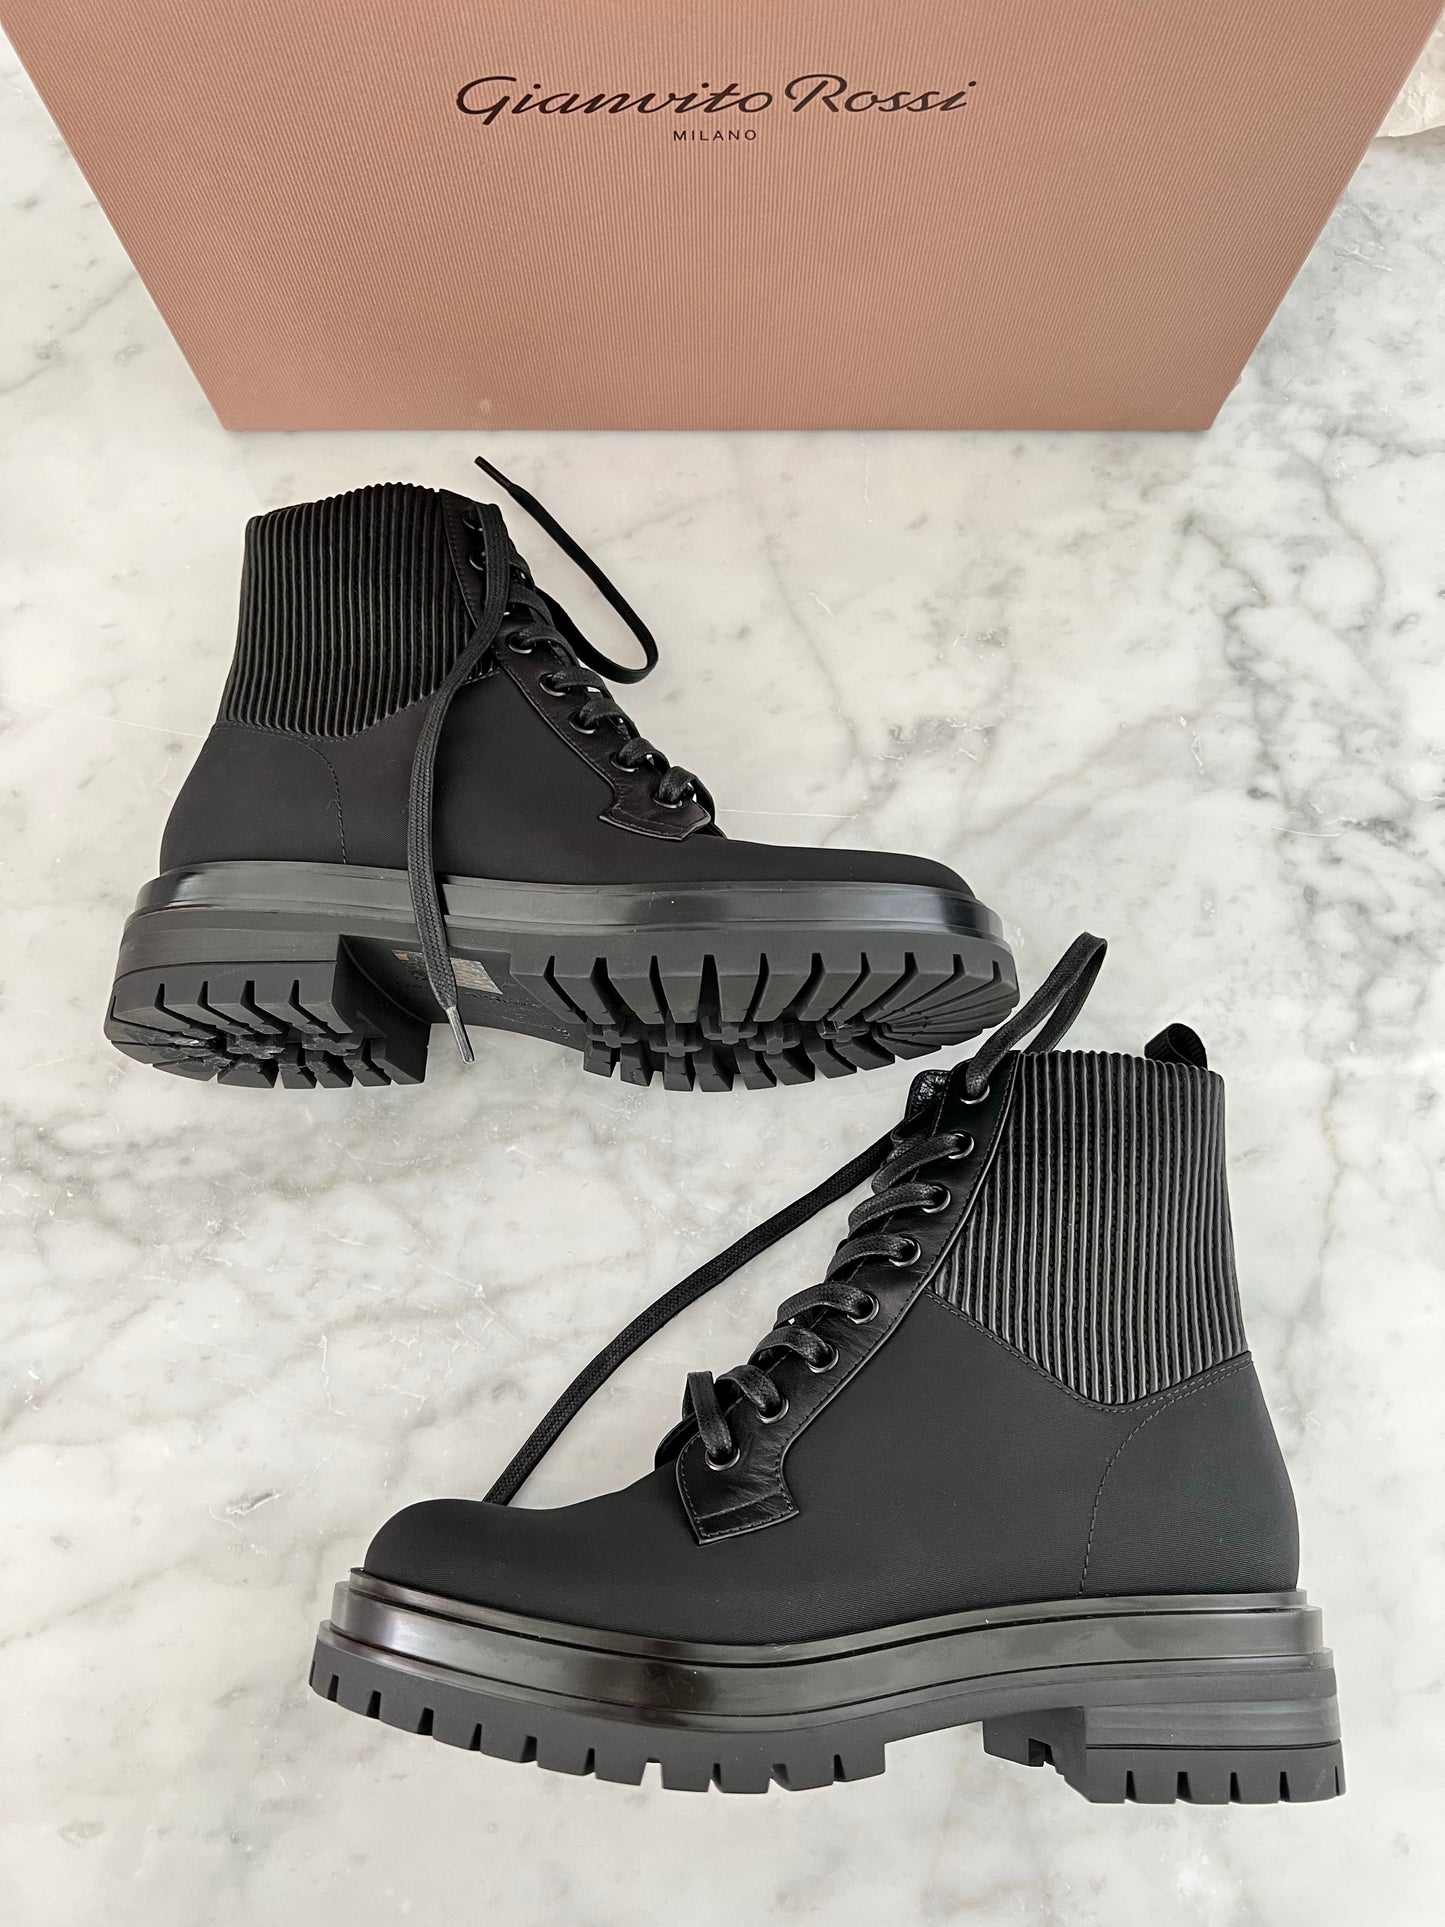 Gianvito Rossi Martis Black Combat Nylon Leather Boots